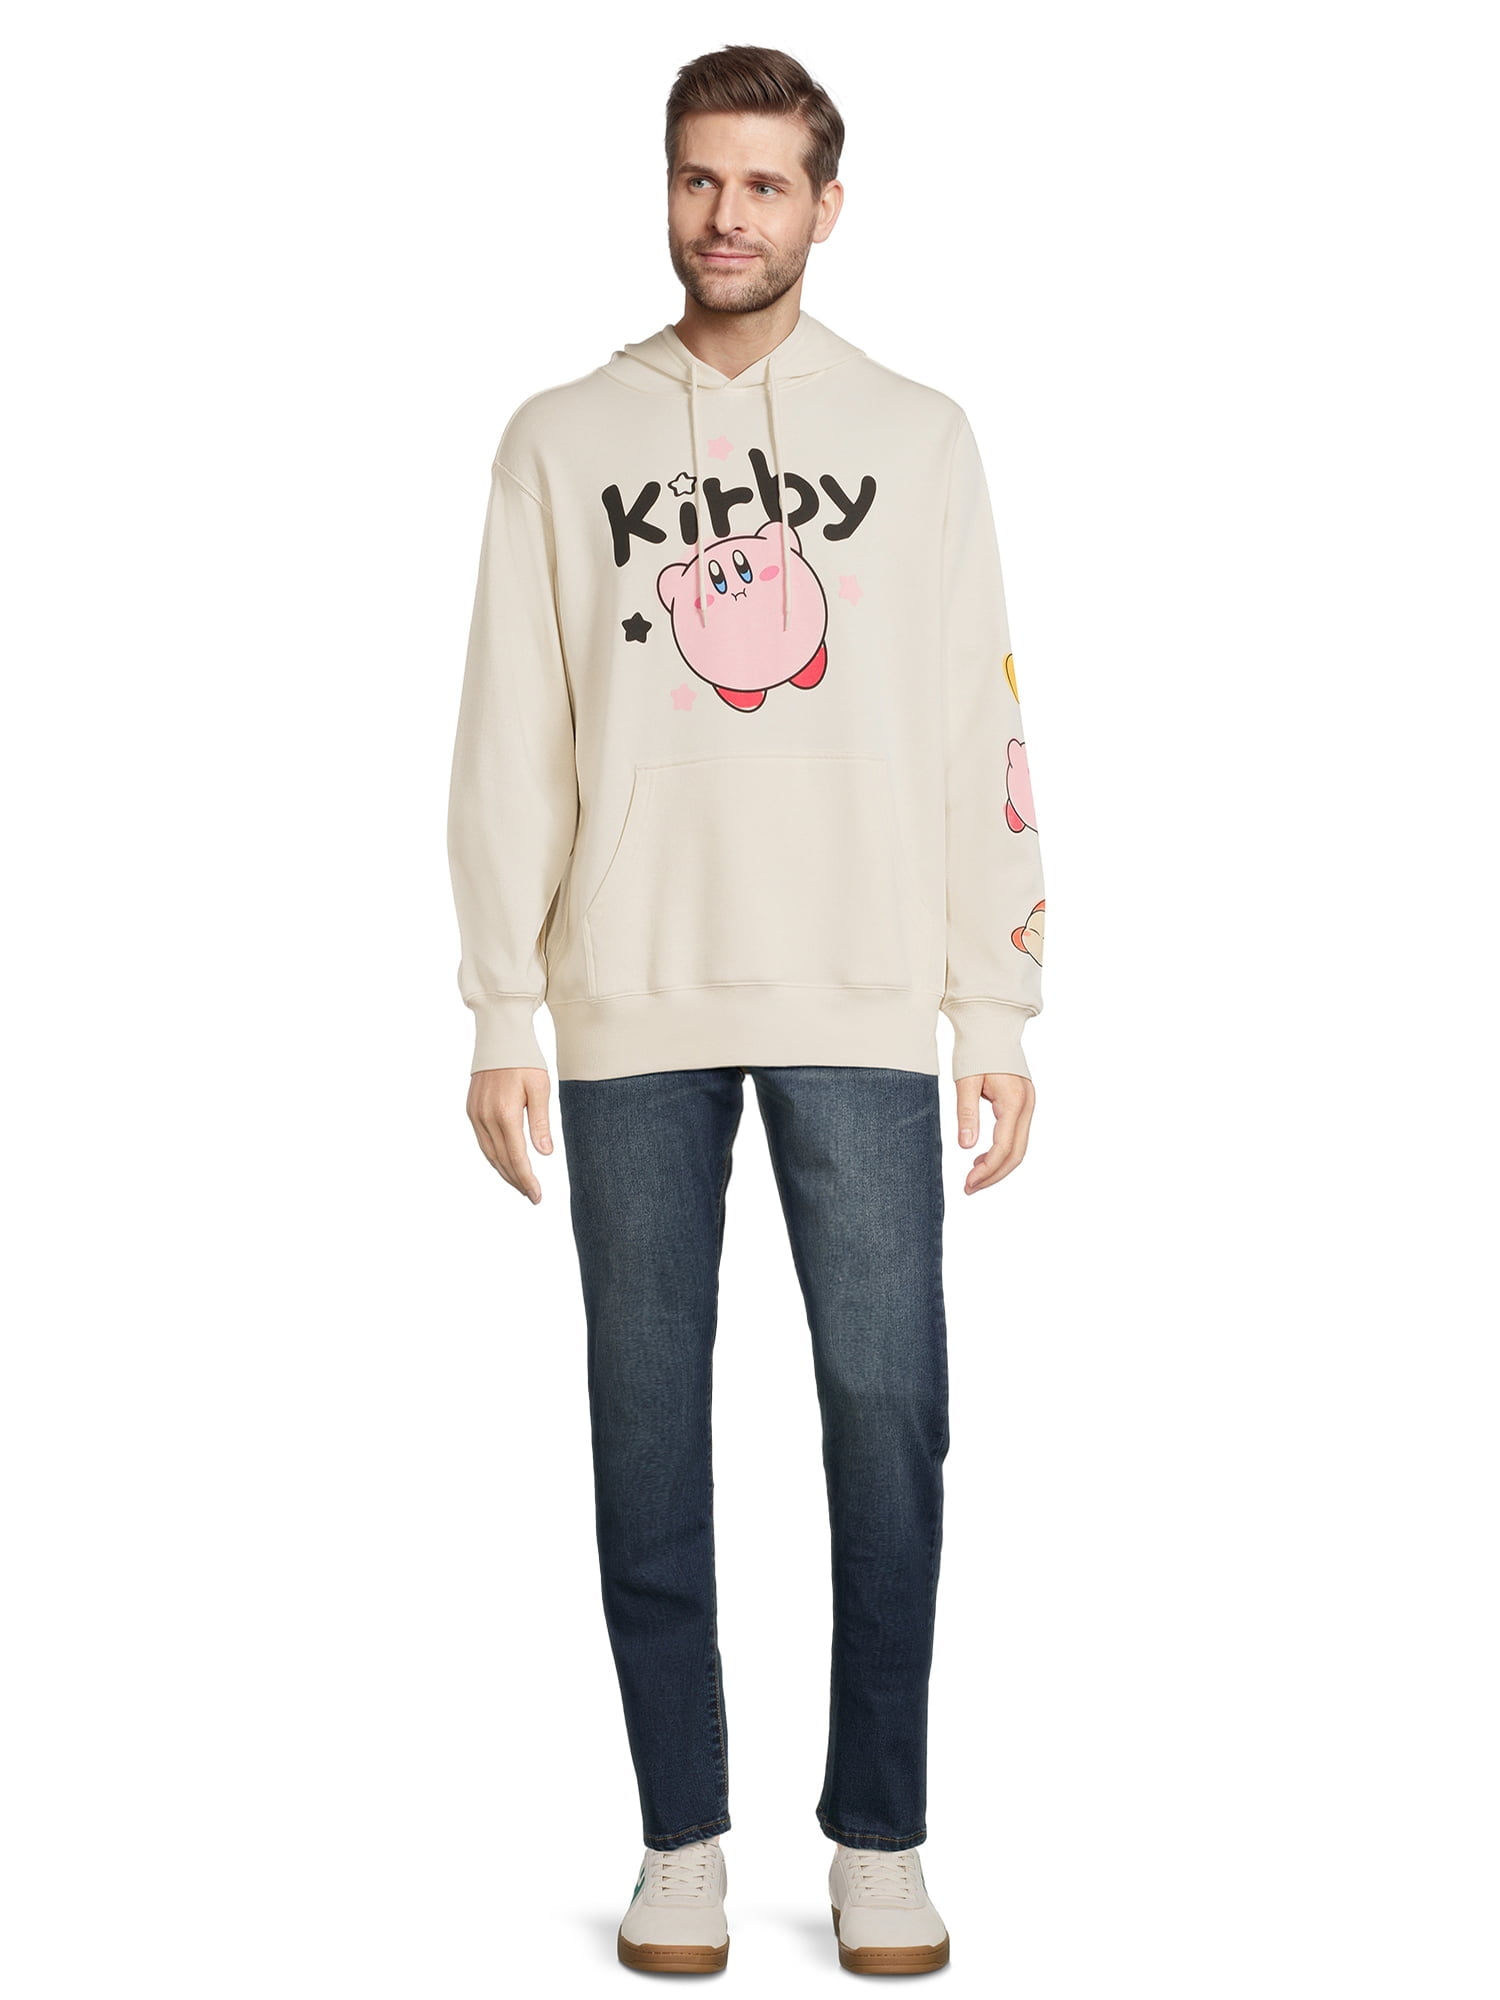 Kirby Men's Hoodie - Walmart.com